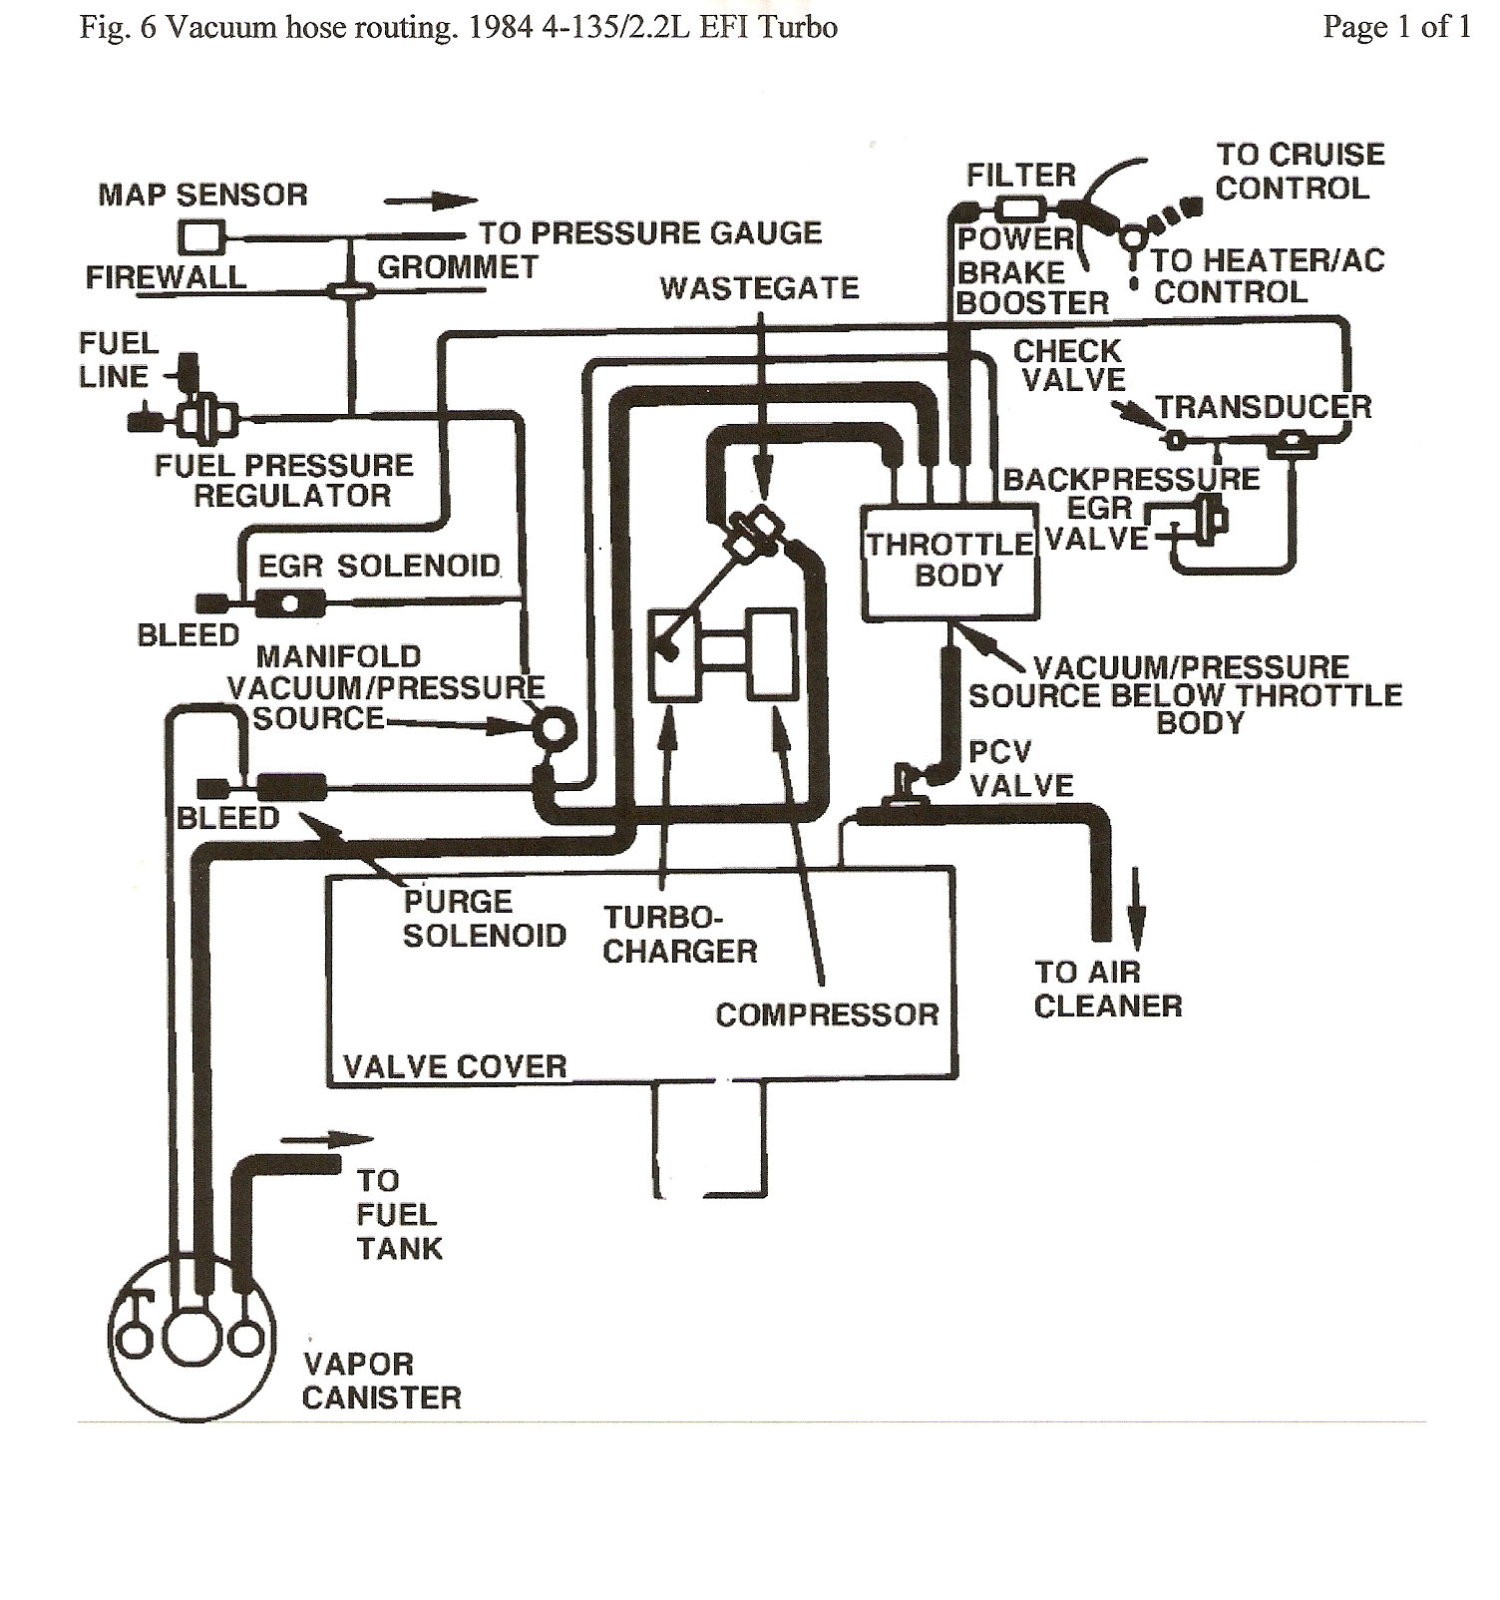 Turbocharger System Diagram Amazing Turbocharger Wastegate Diagram Ideas Electrical Diagram Of Turbocharger System Diagram